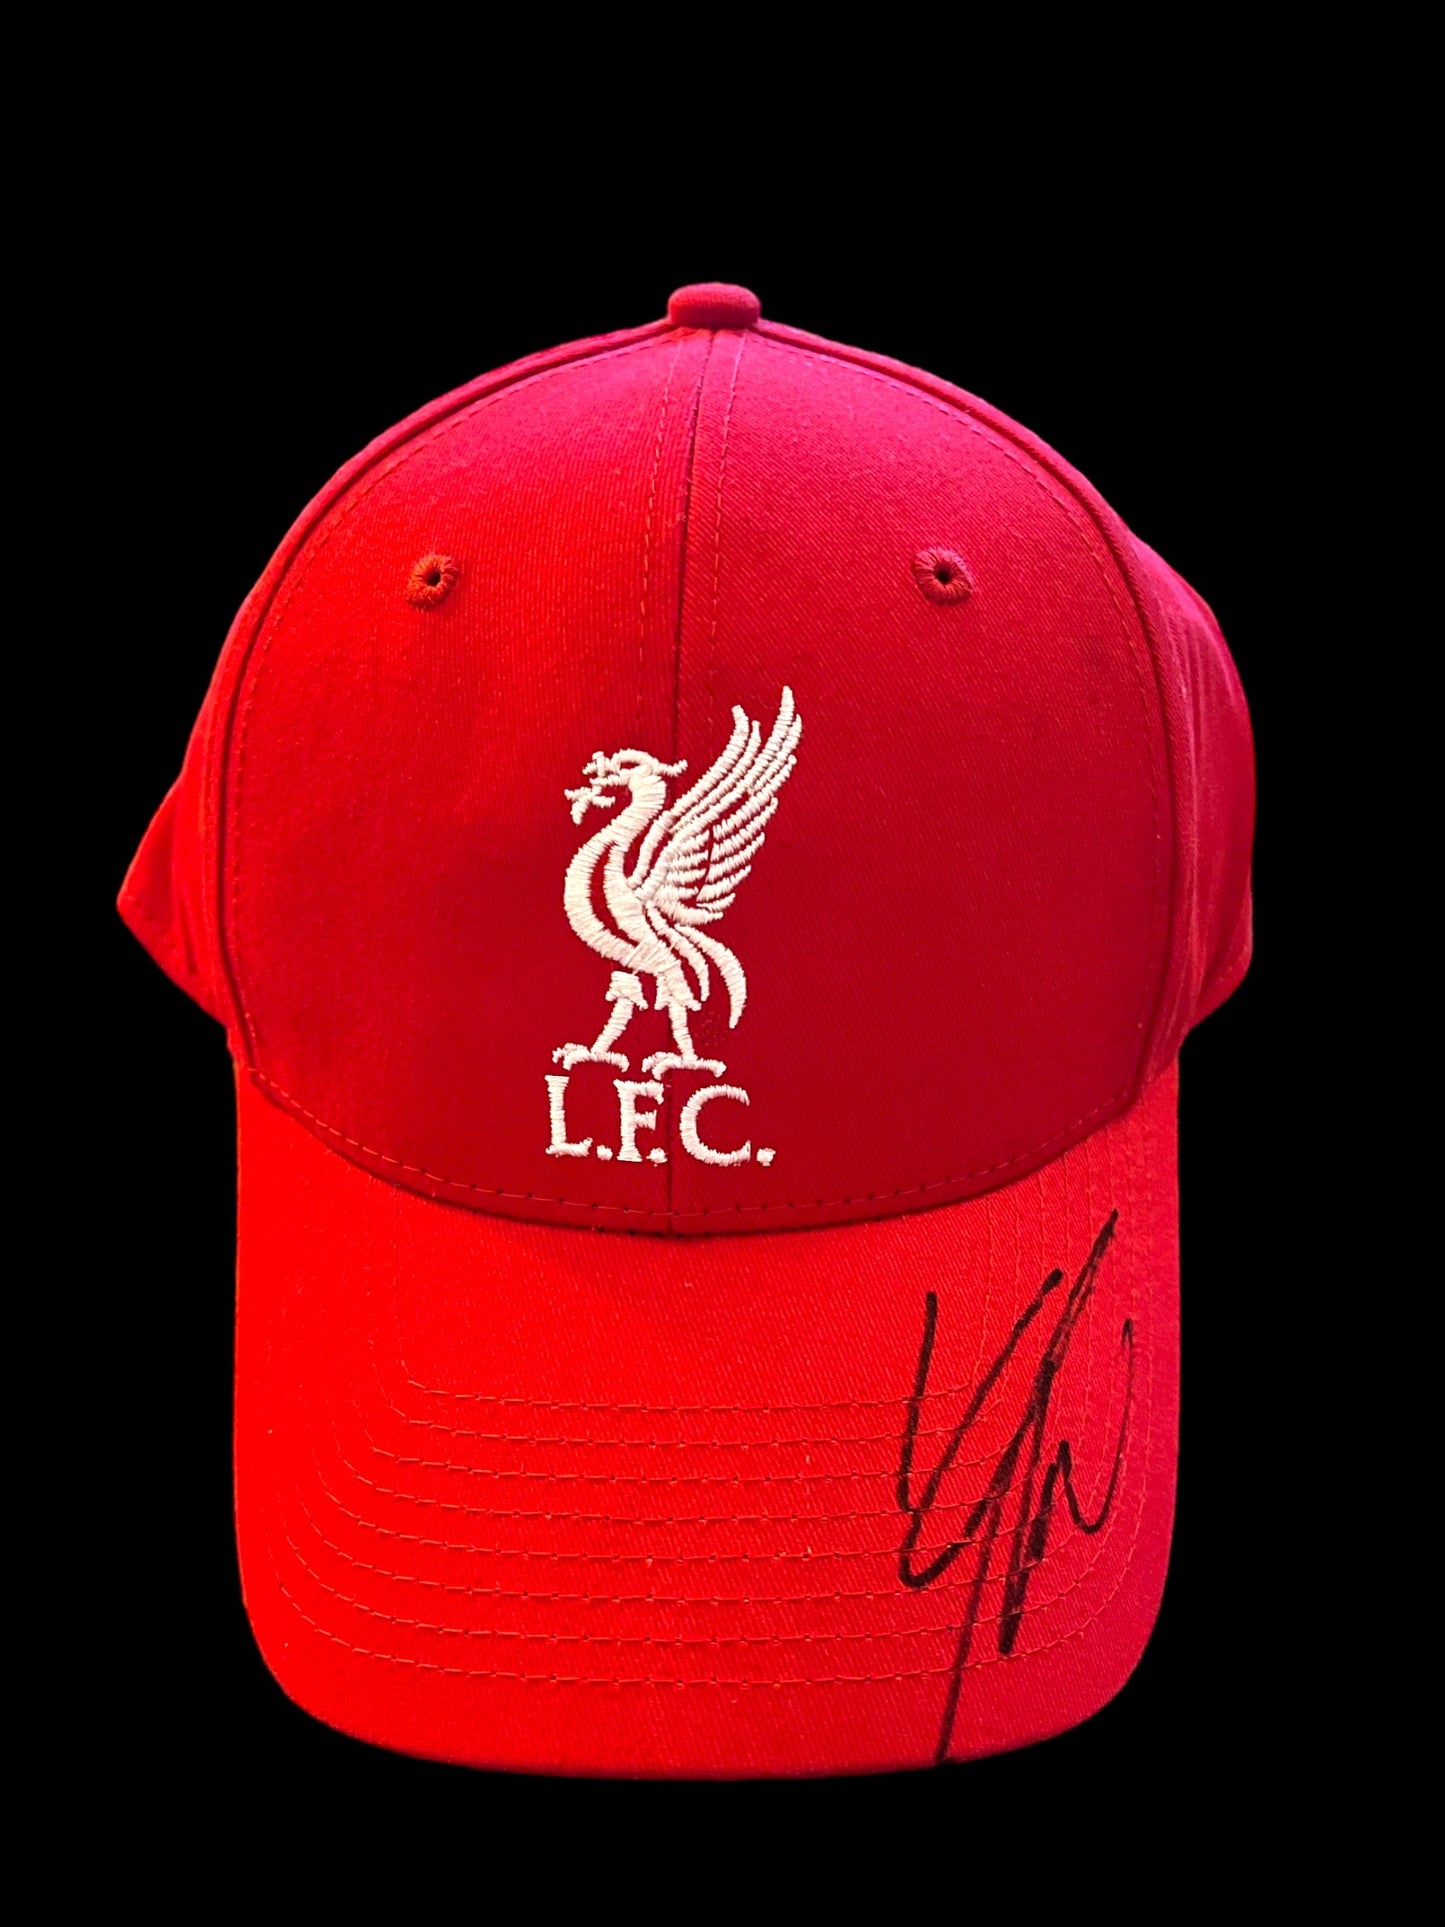 Jurgen Klopp Signed Liverpool Official Cap